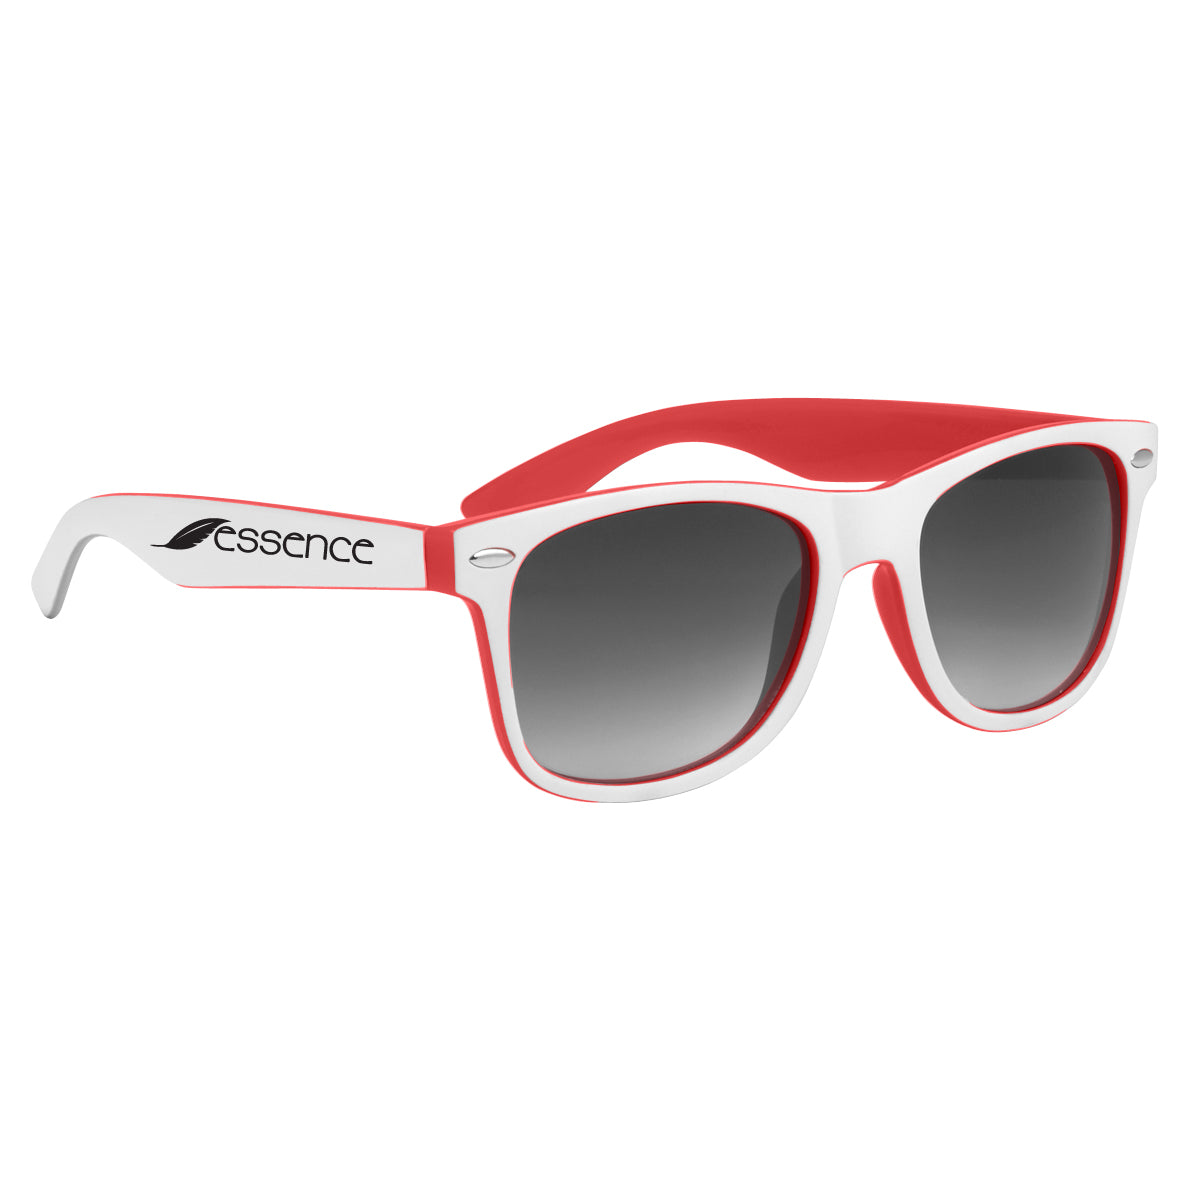 Two-Tone Malibu Sunglasses Sunglasses Hit Promo Red & White Single Color 